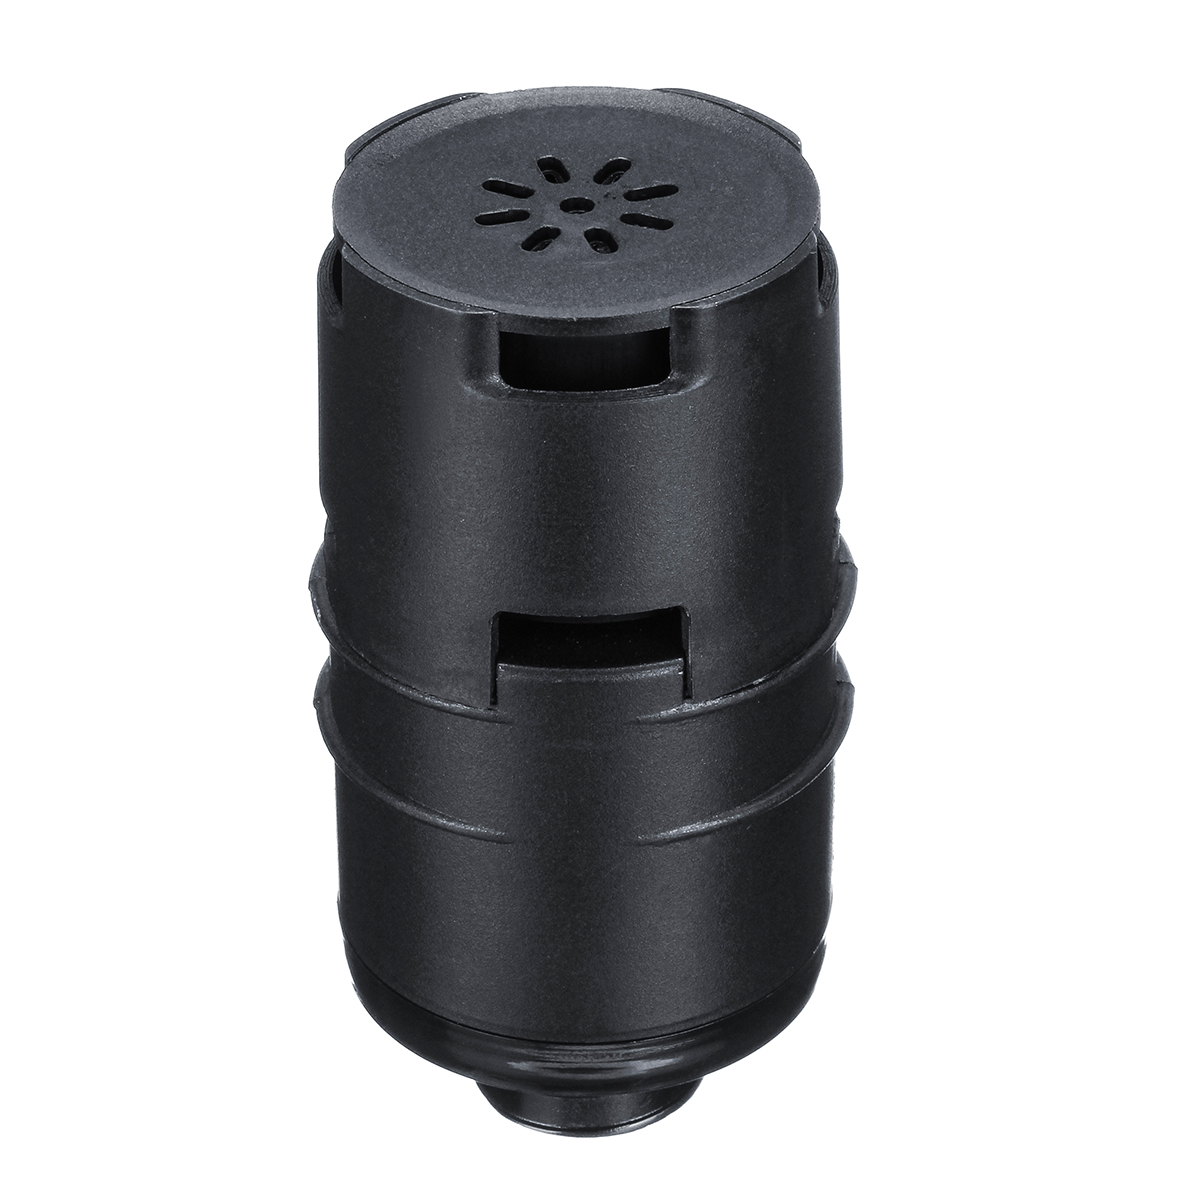 25mm-Air-Intake-Filter-Silencer-Clip-For-Dometic-Eberspacher-Webasto-Diesel-Heater-1354735